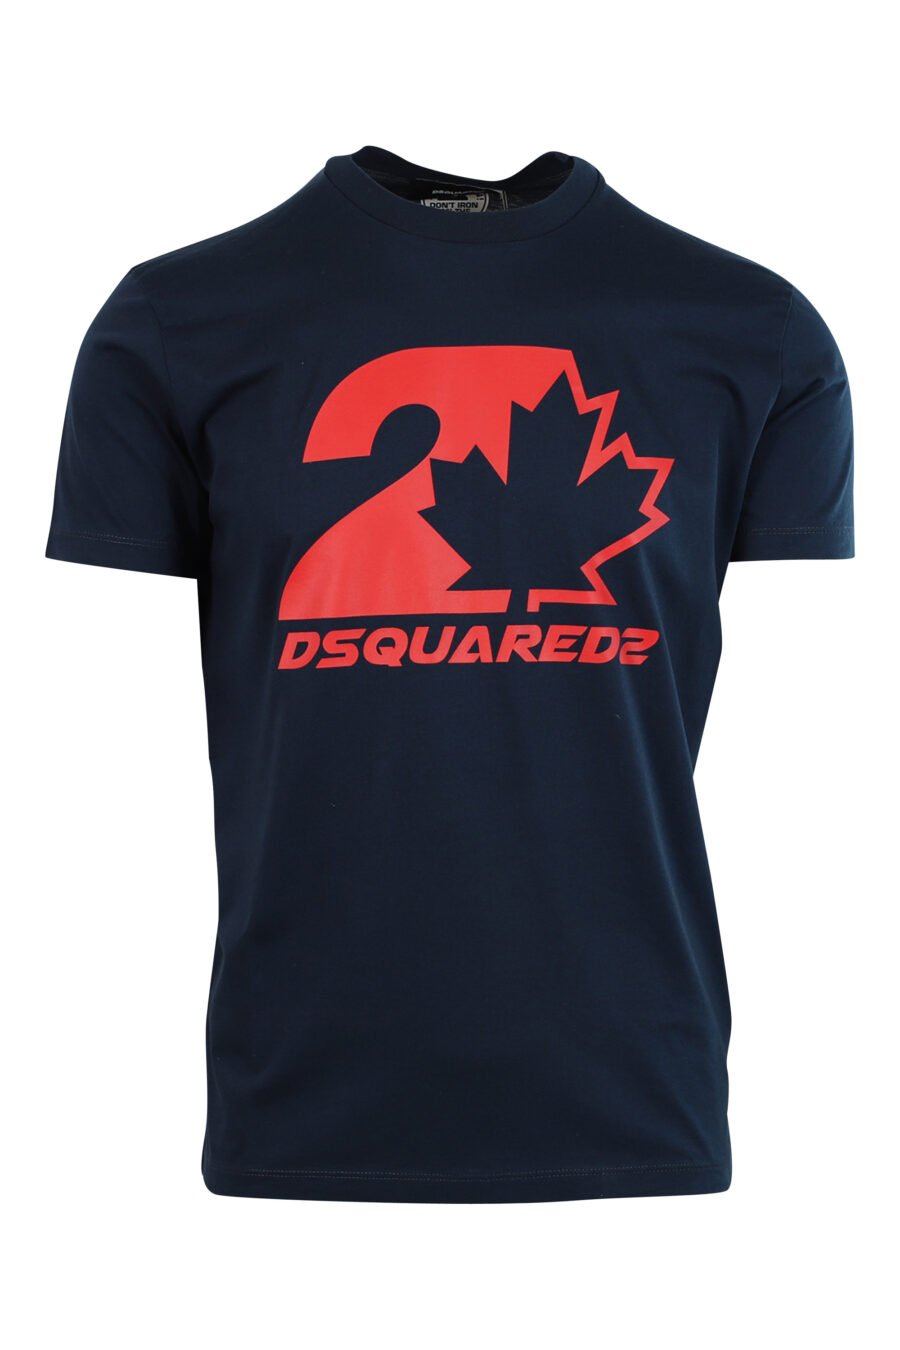 Dunkelblaues T-Shirt mit rotem Mini-Logo in konturierter Blattgrafik - 8054148046569